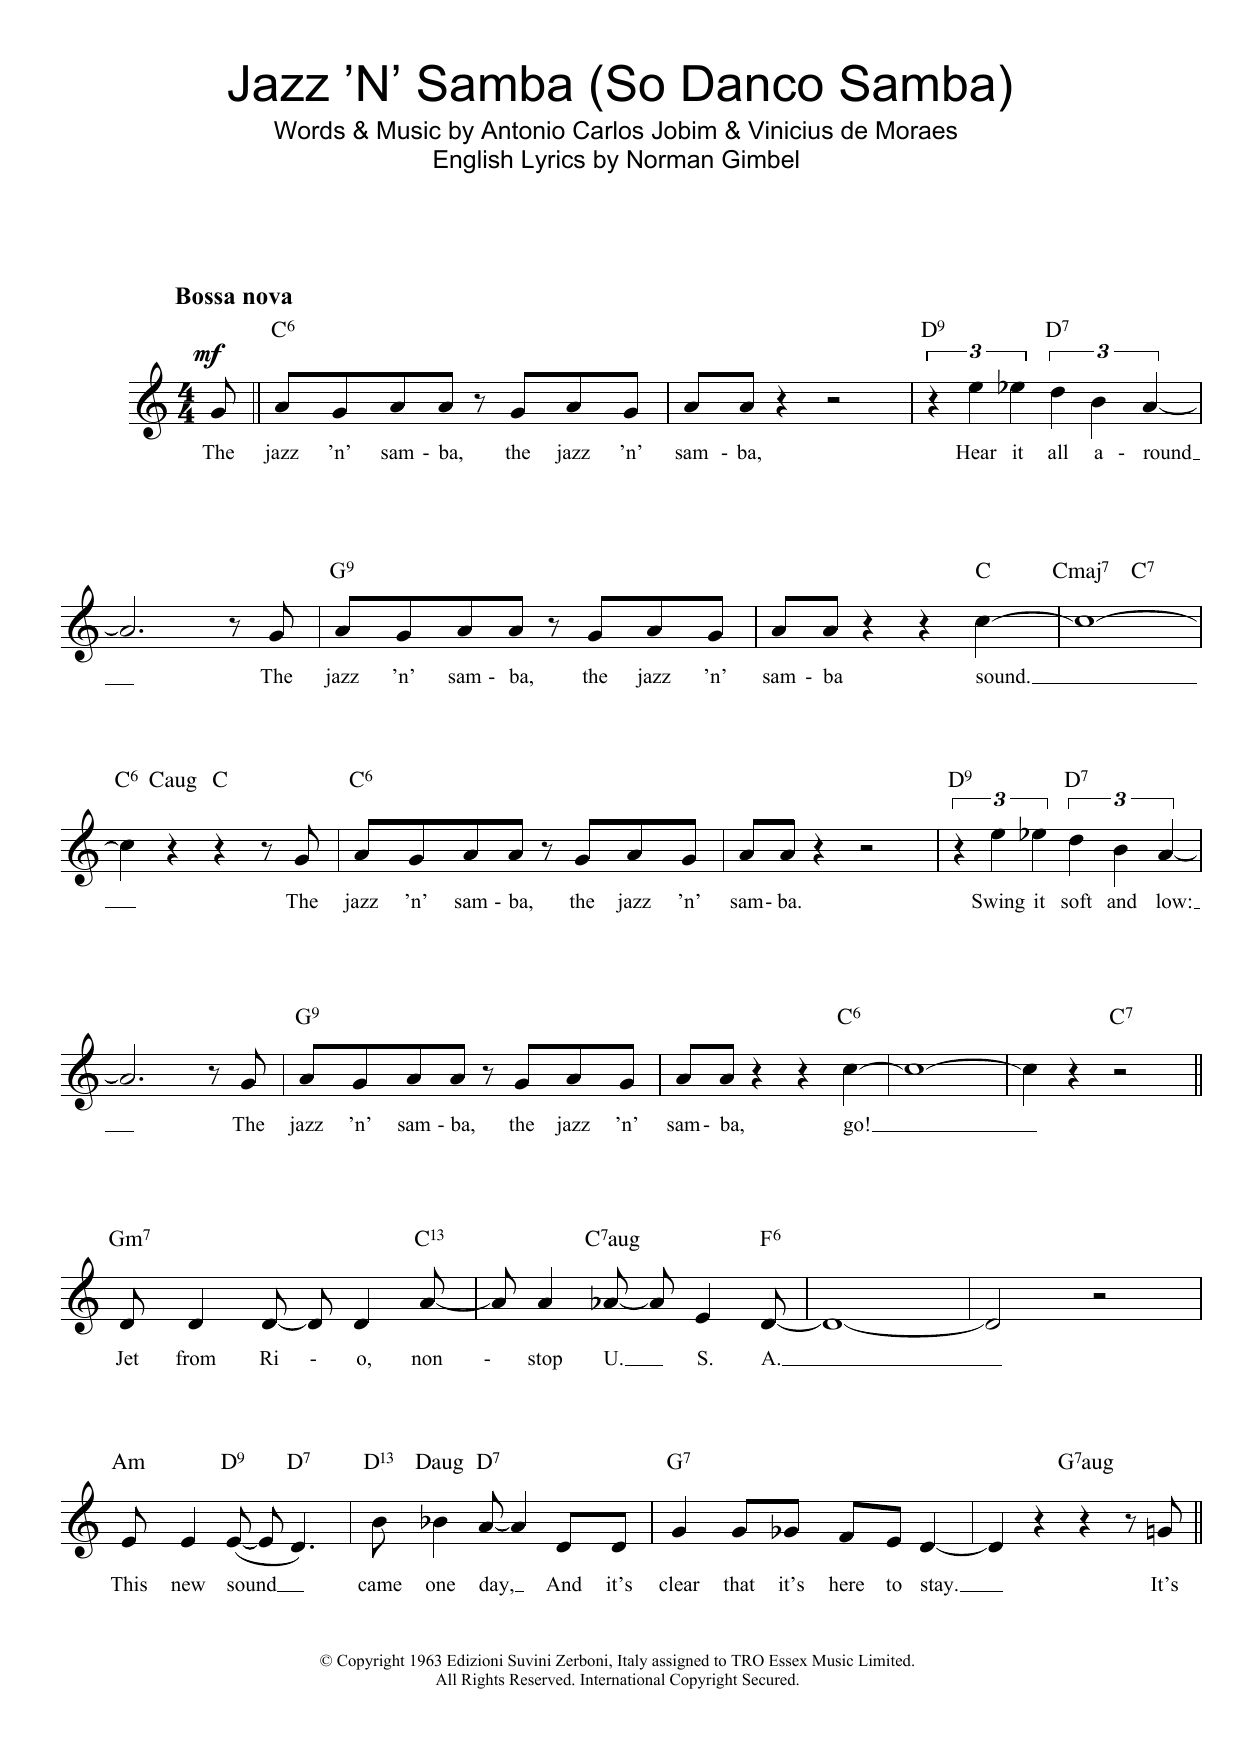 Download Antonio Carlos Jobim Jazz 'N' Samba (Só Danço Samba) Sheet Music and learn how to play Easy Piano PDF digital score in minutes